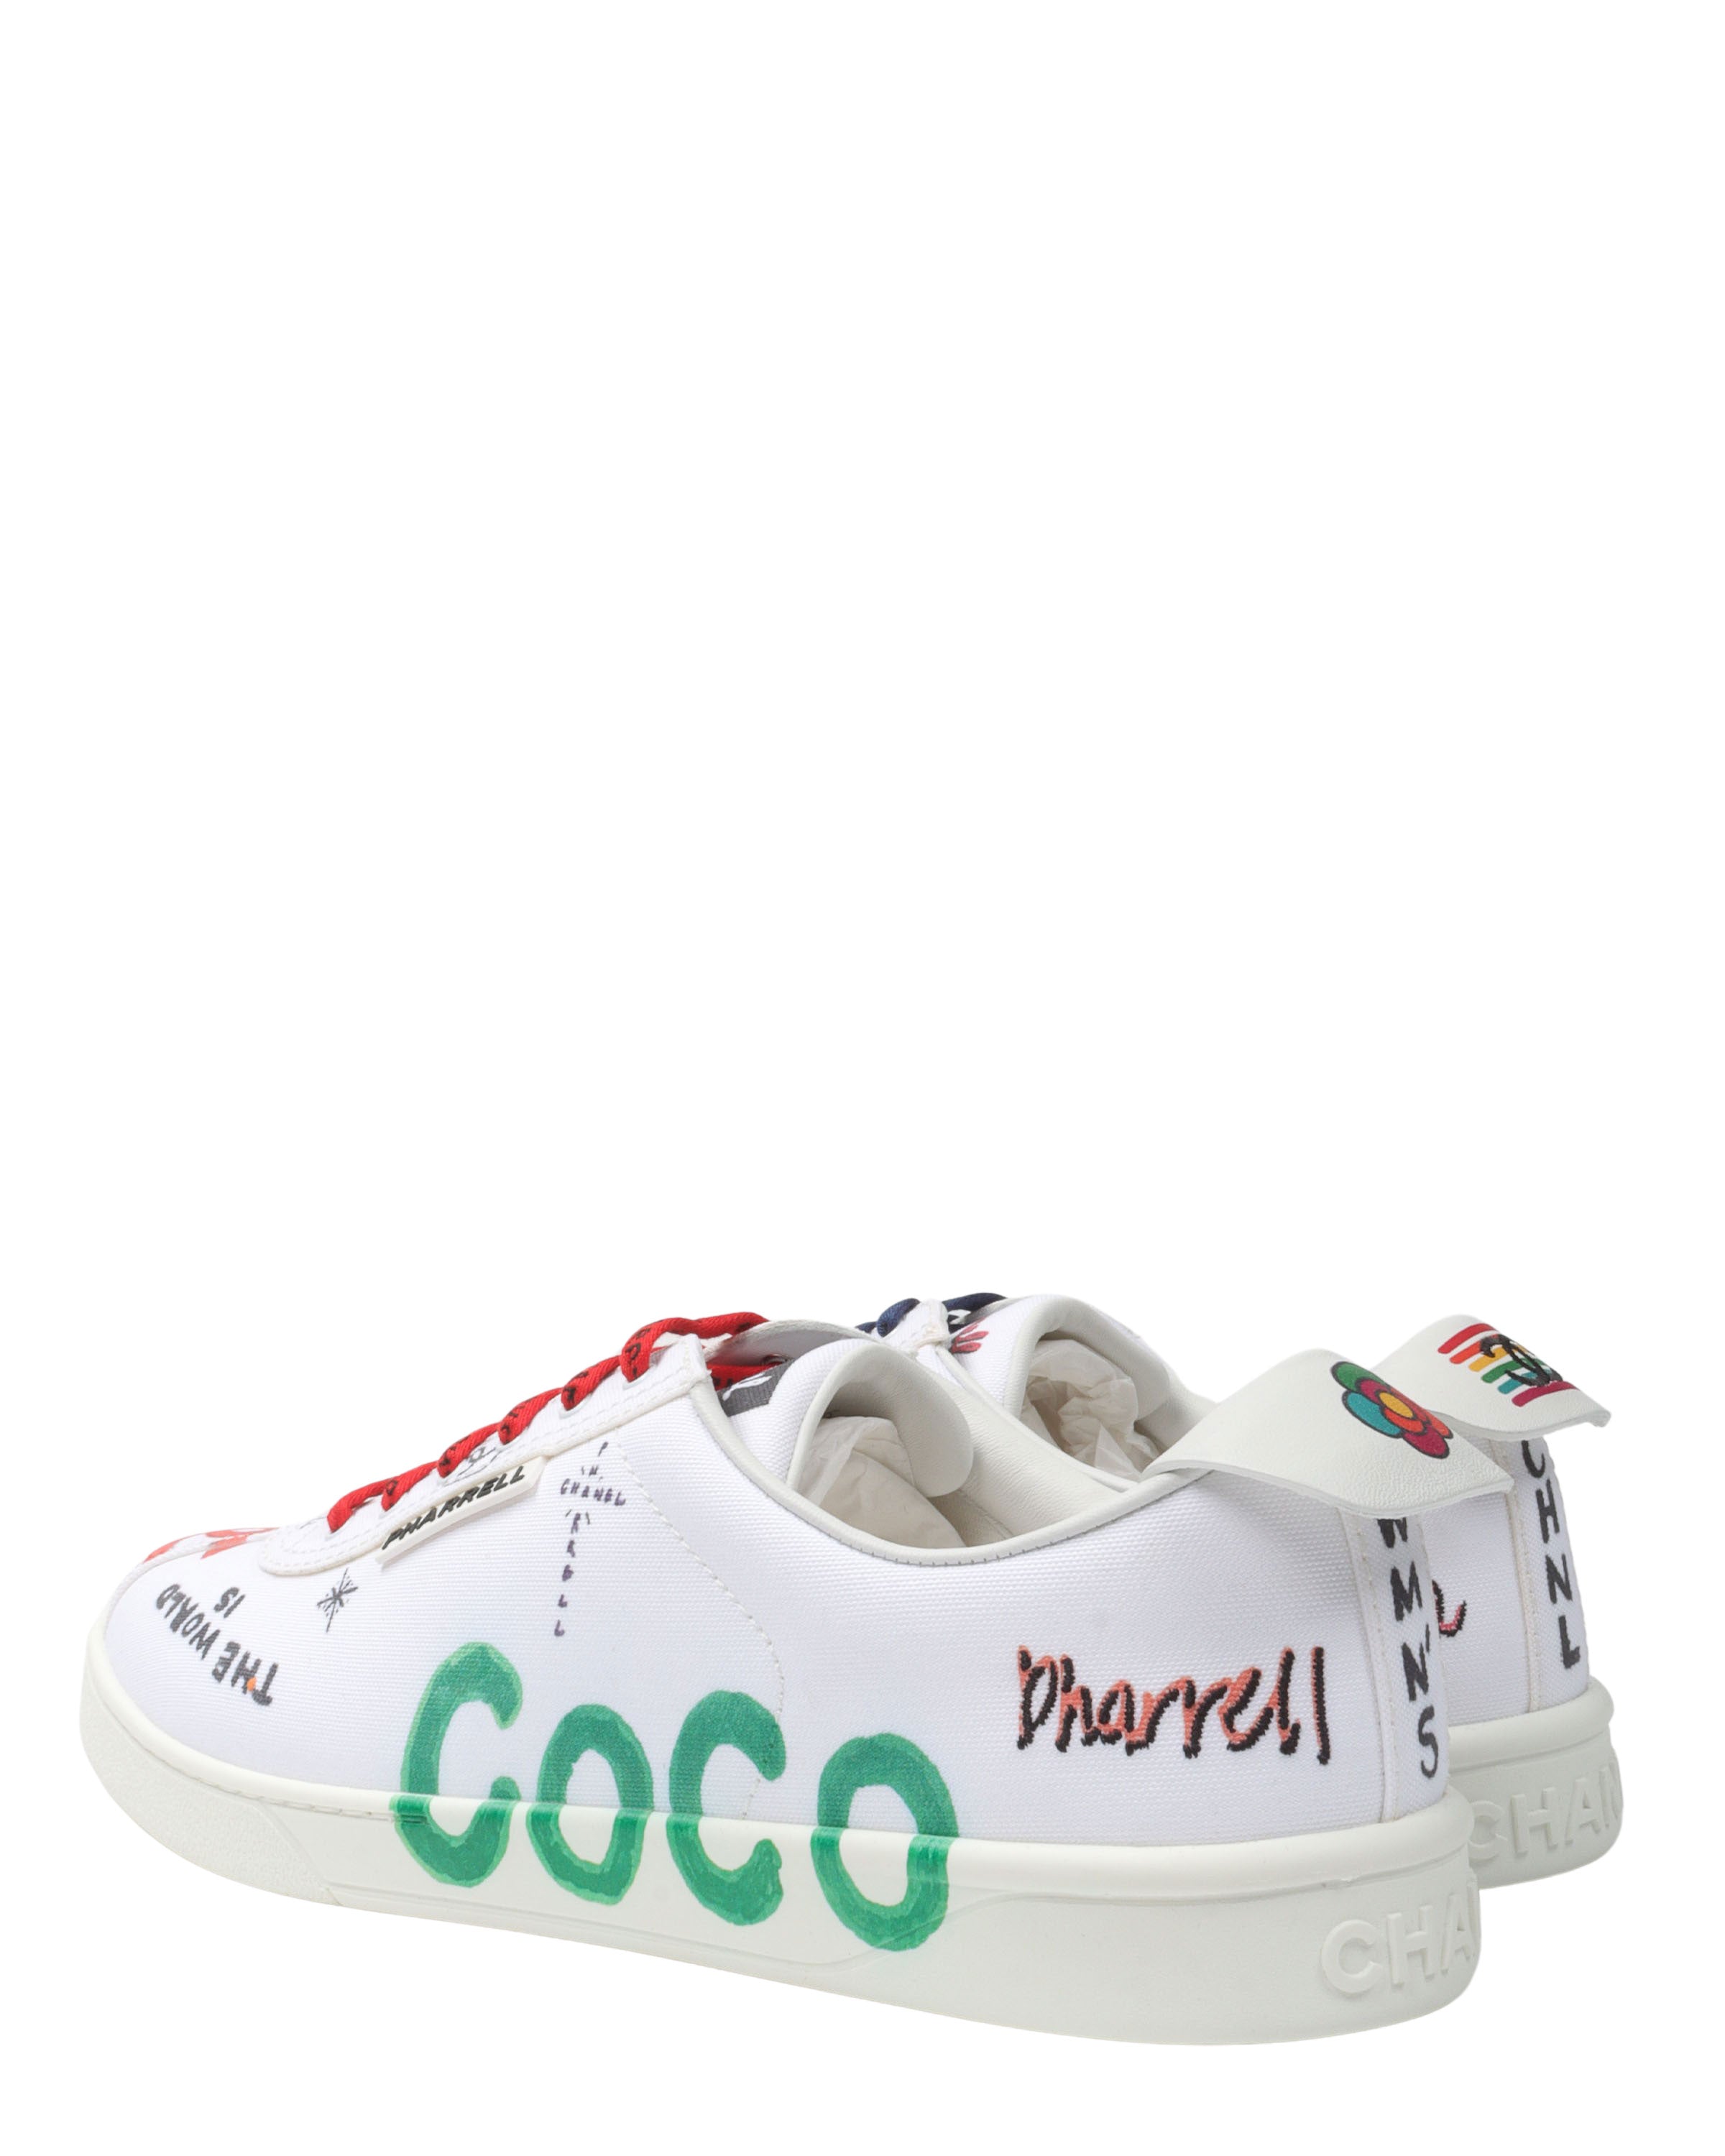 Pharrell Time Capsule Sneakers